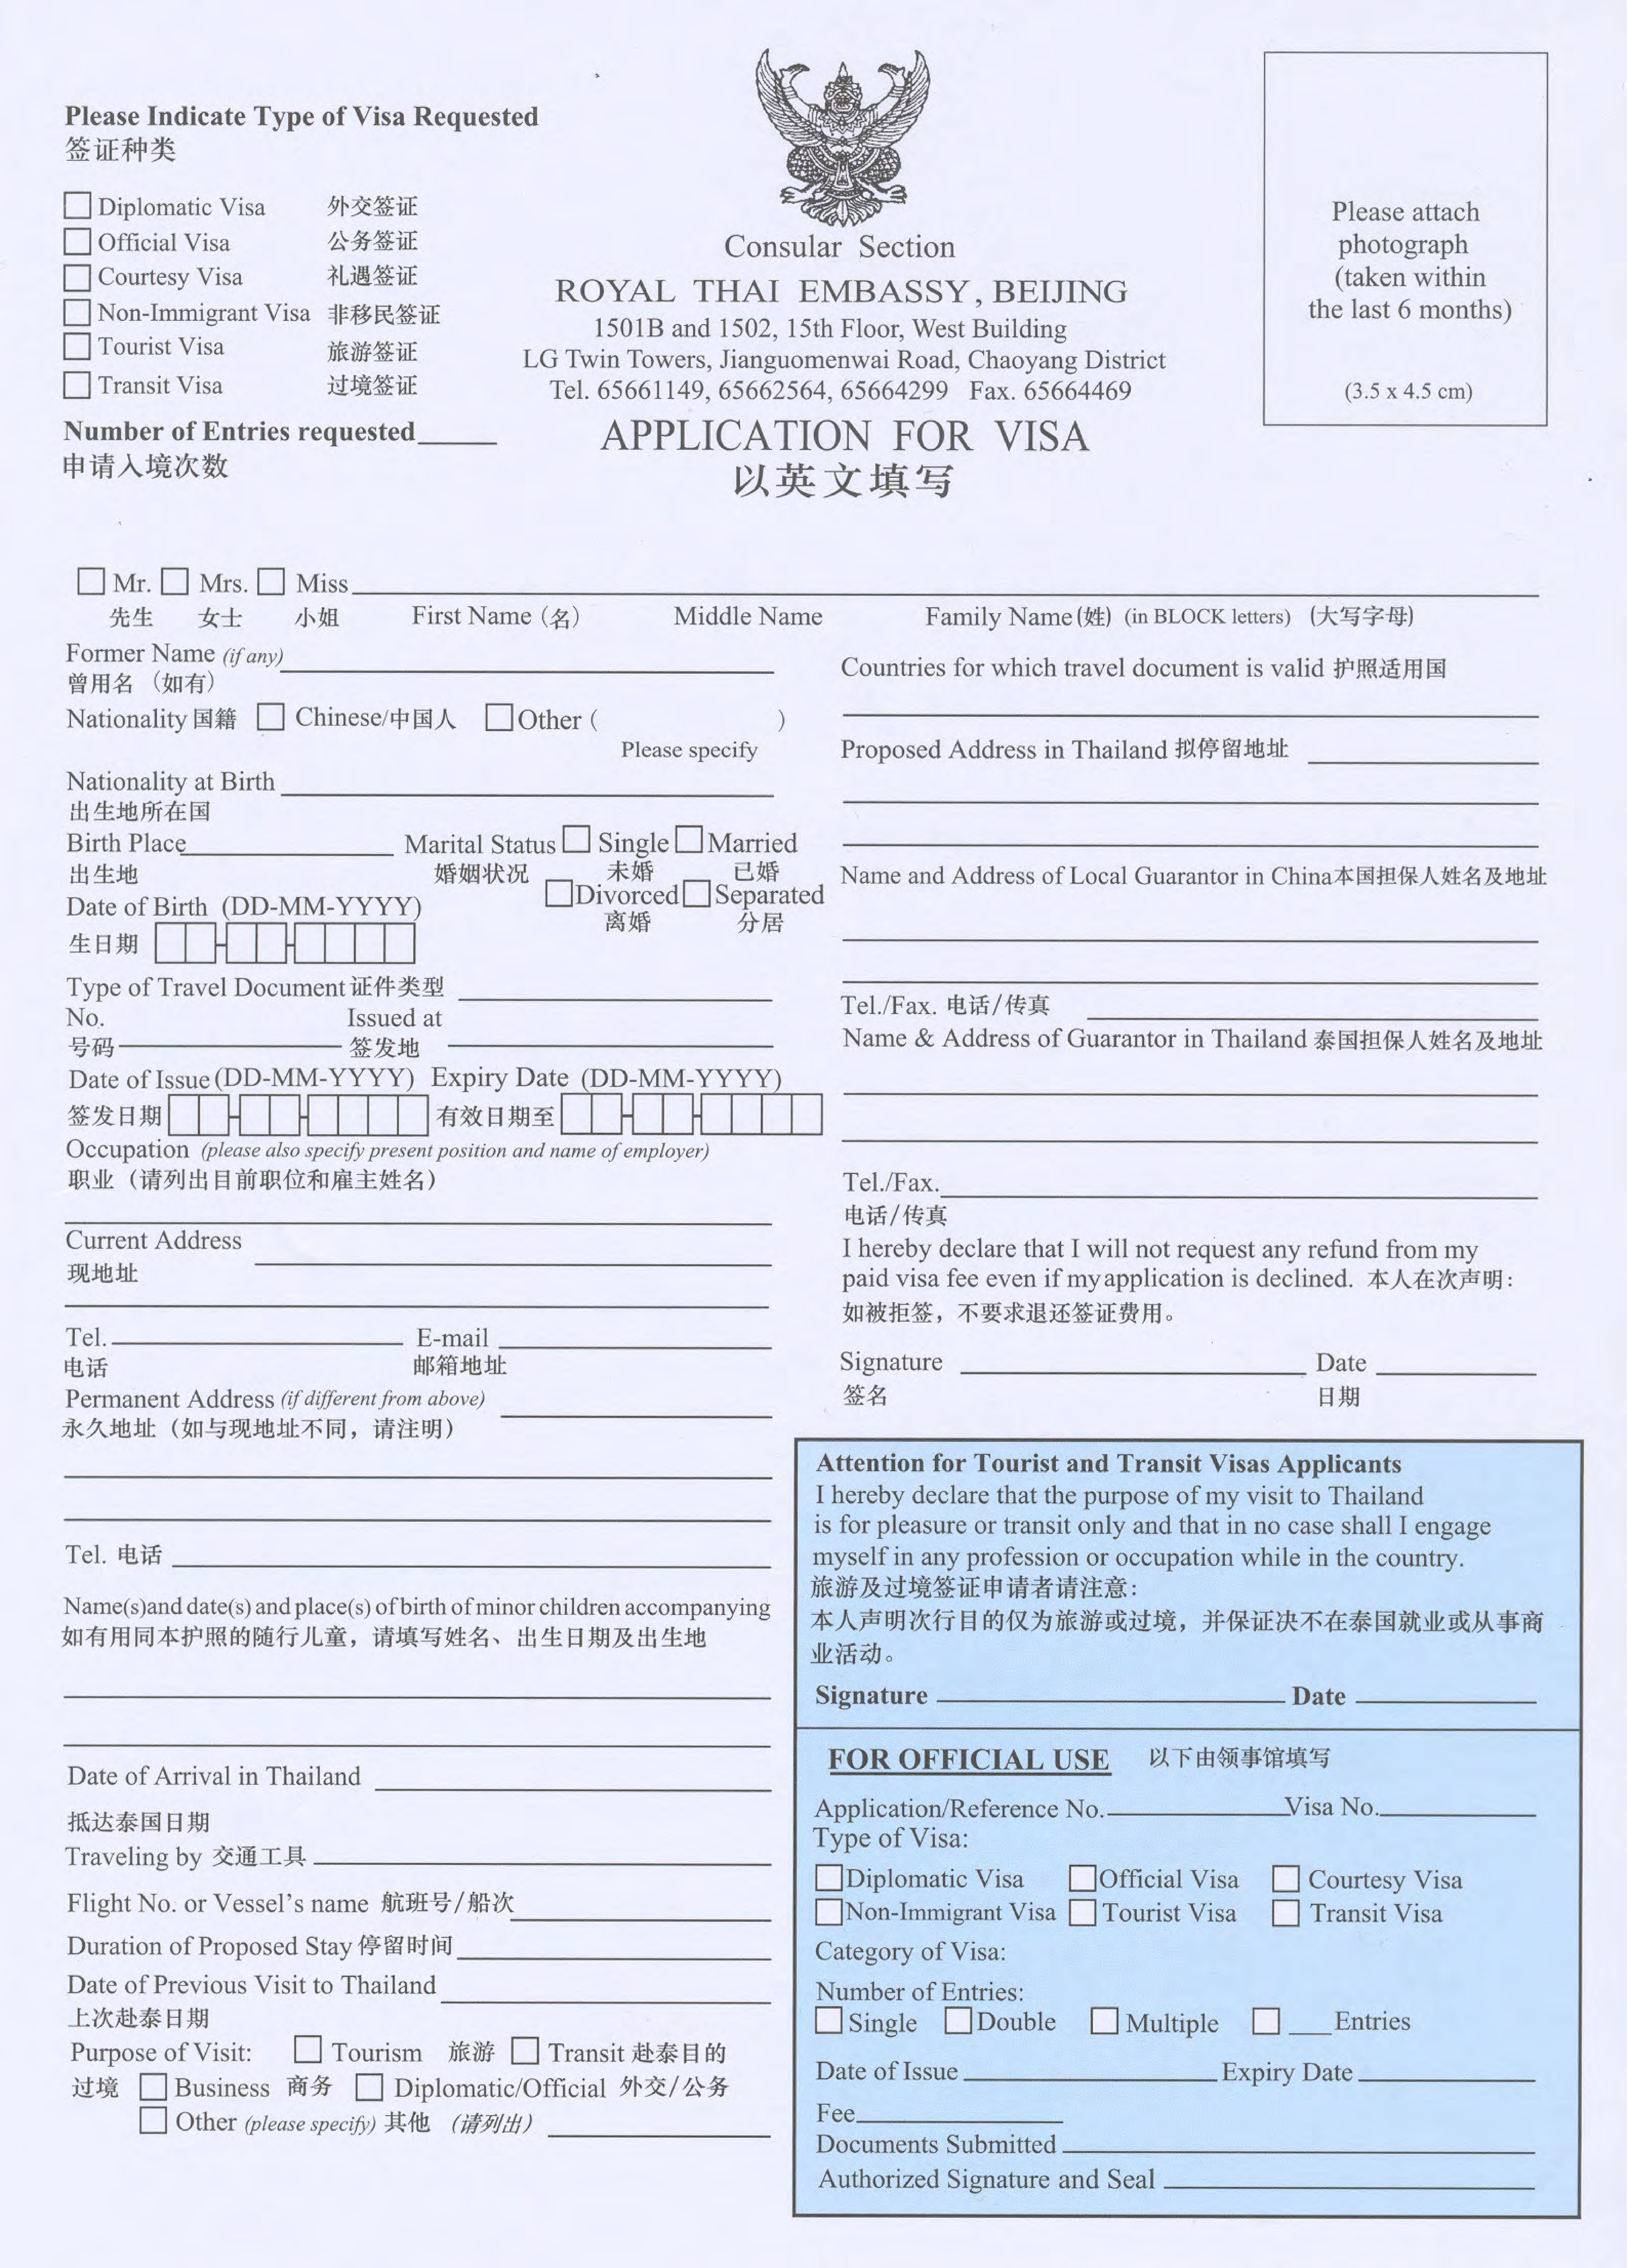 Visa Application for Thailand main image